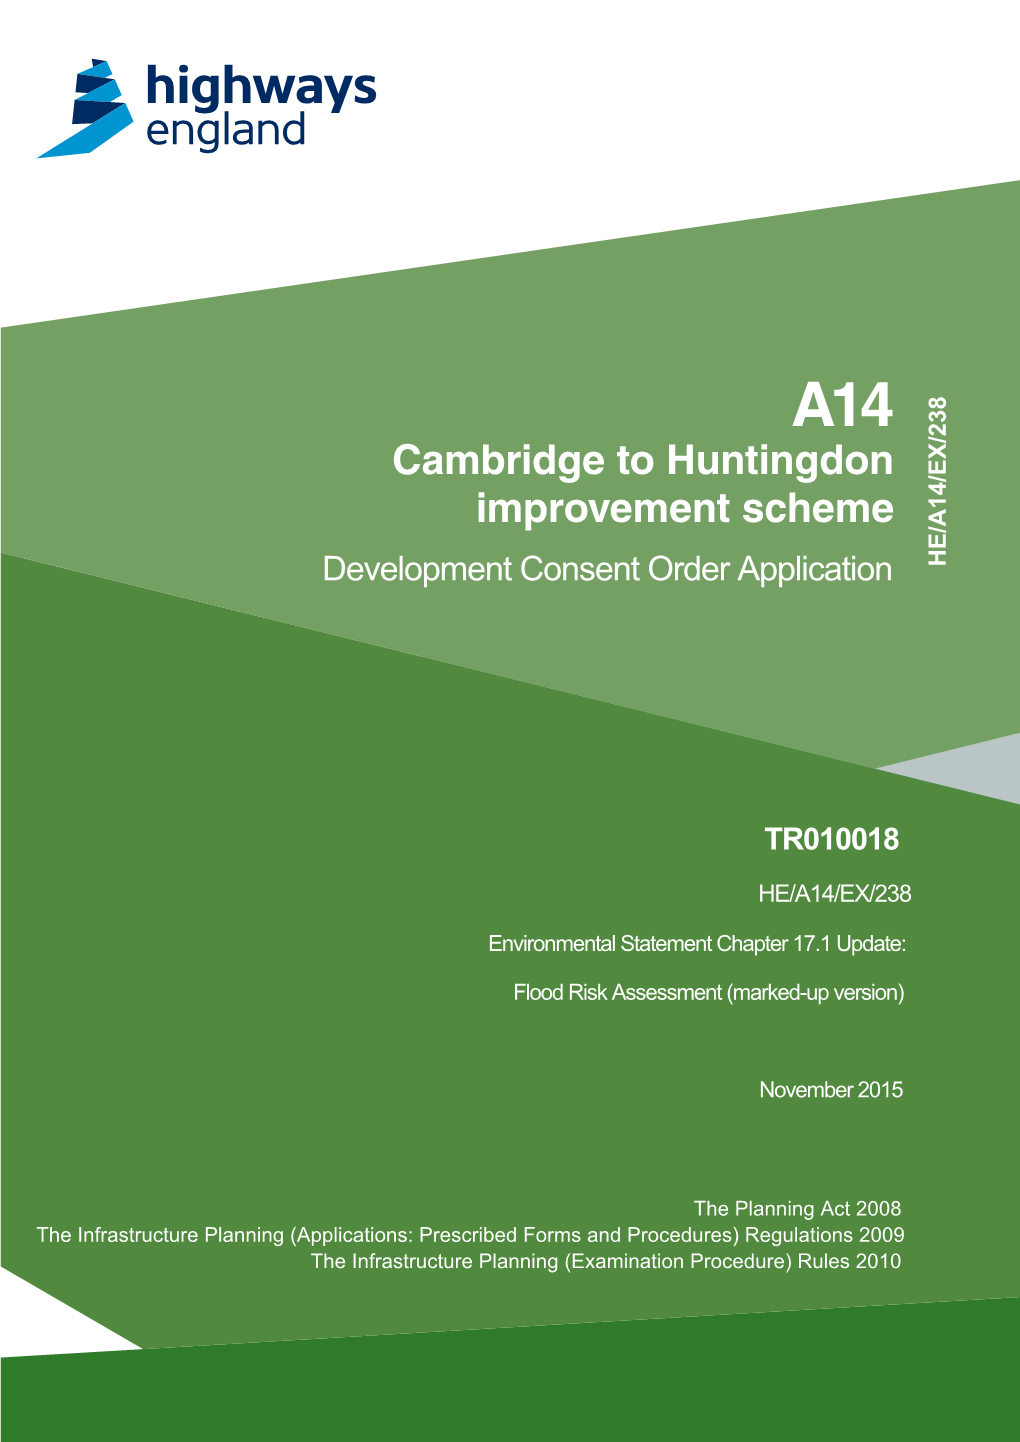 A14 Cambridge to Huntingdon Improvement Scheme